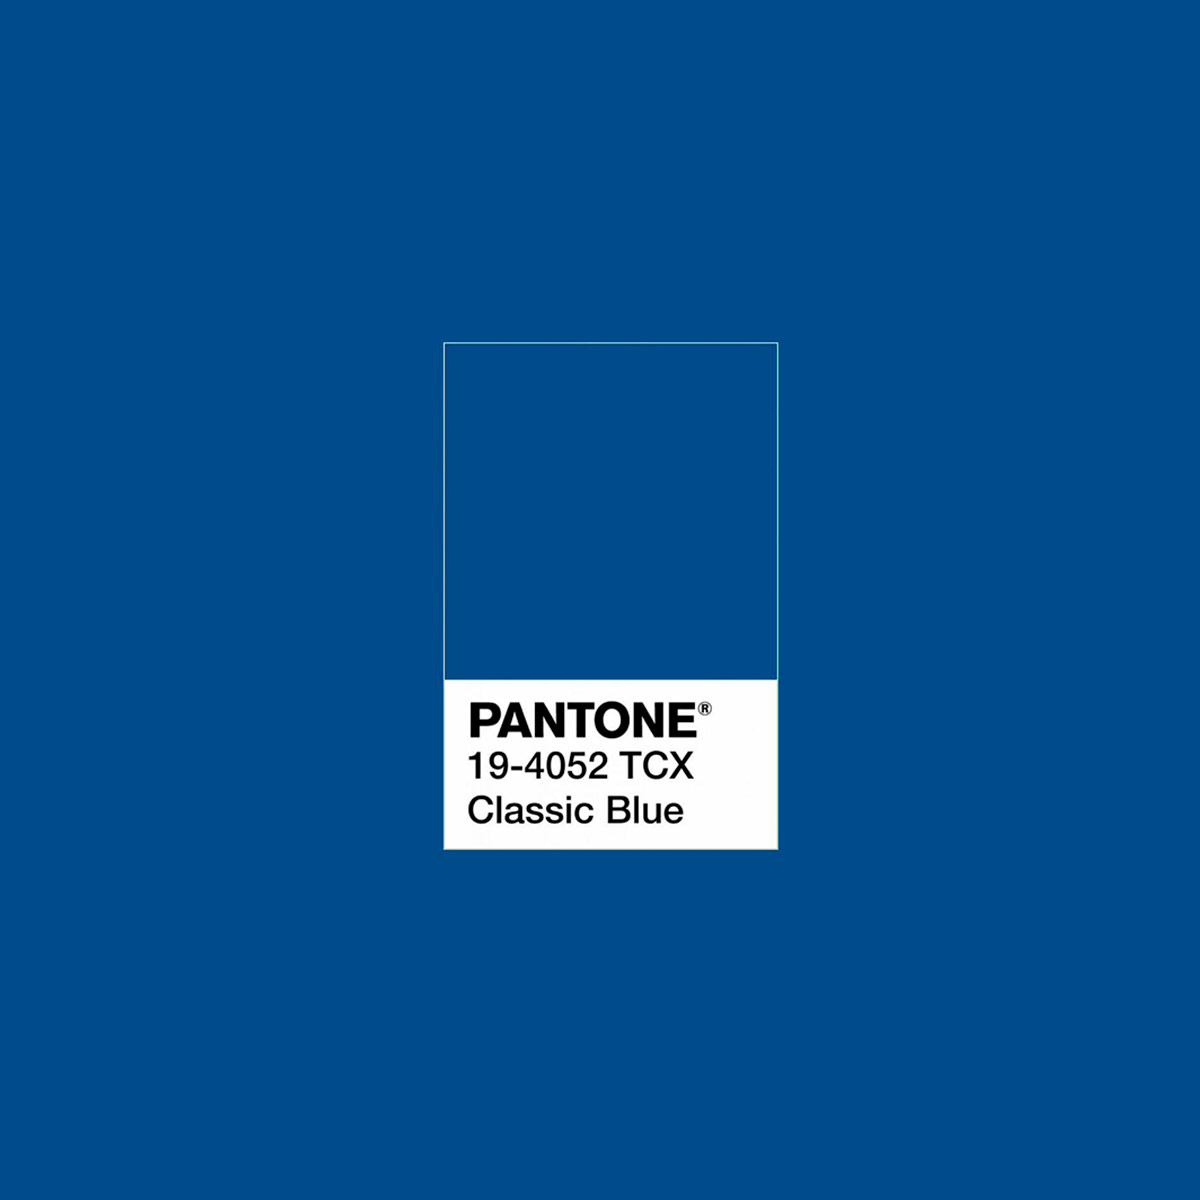 Classic Blue - Color Pantone del Año 2020 - dopamine brands